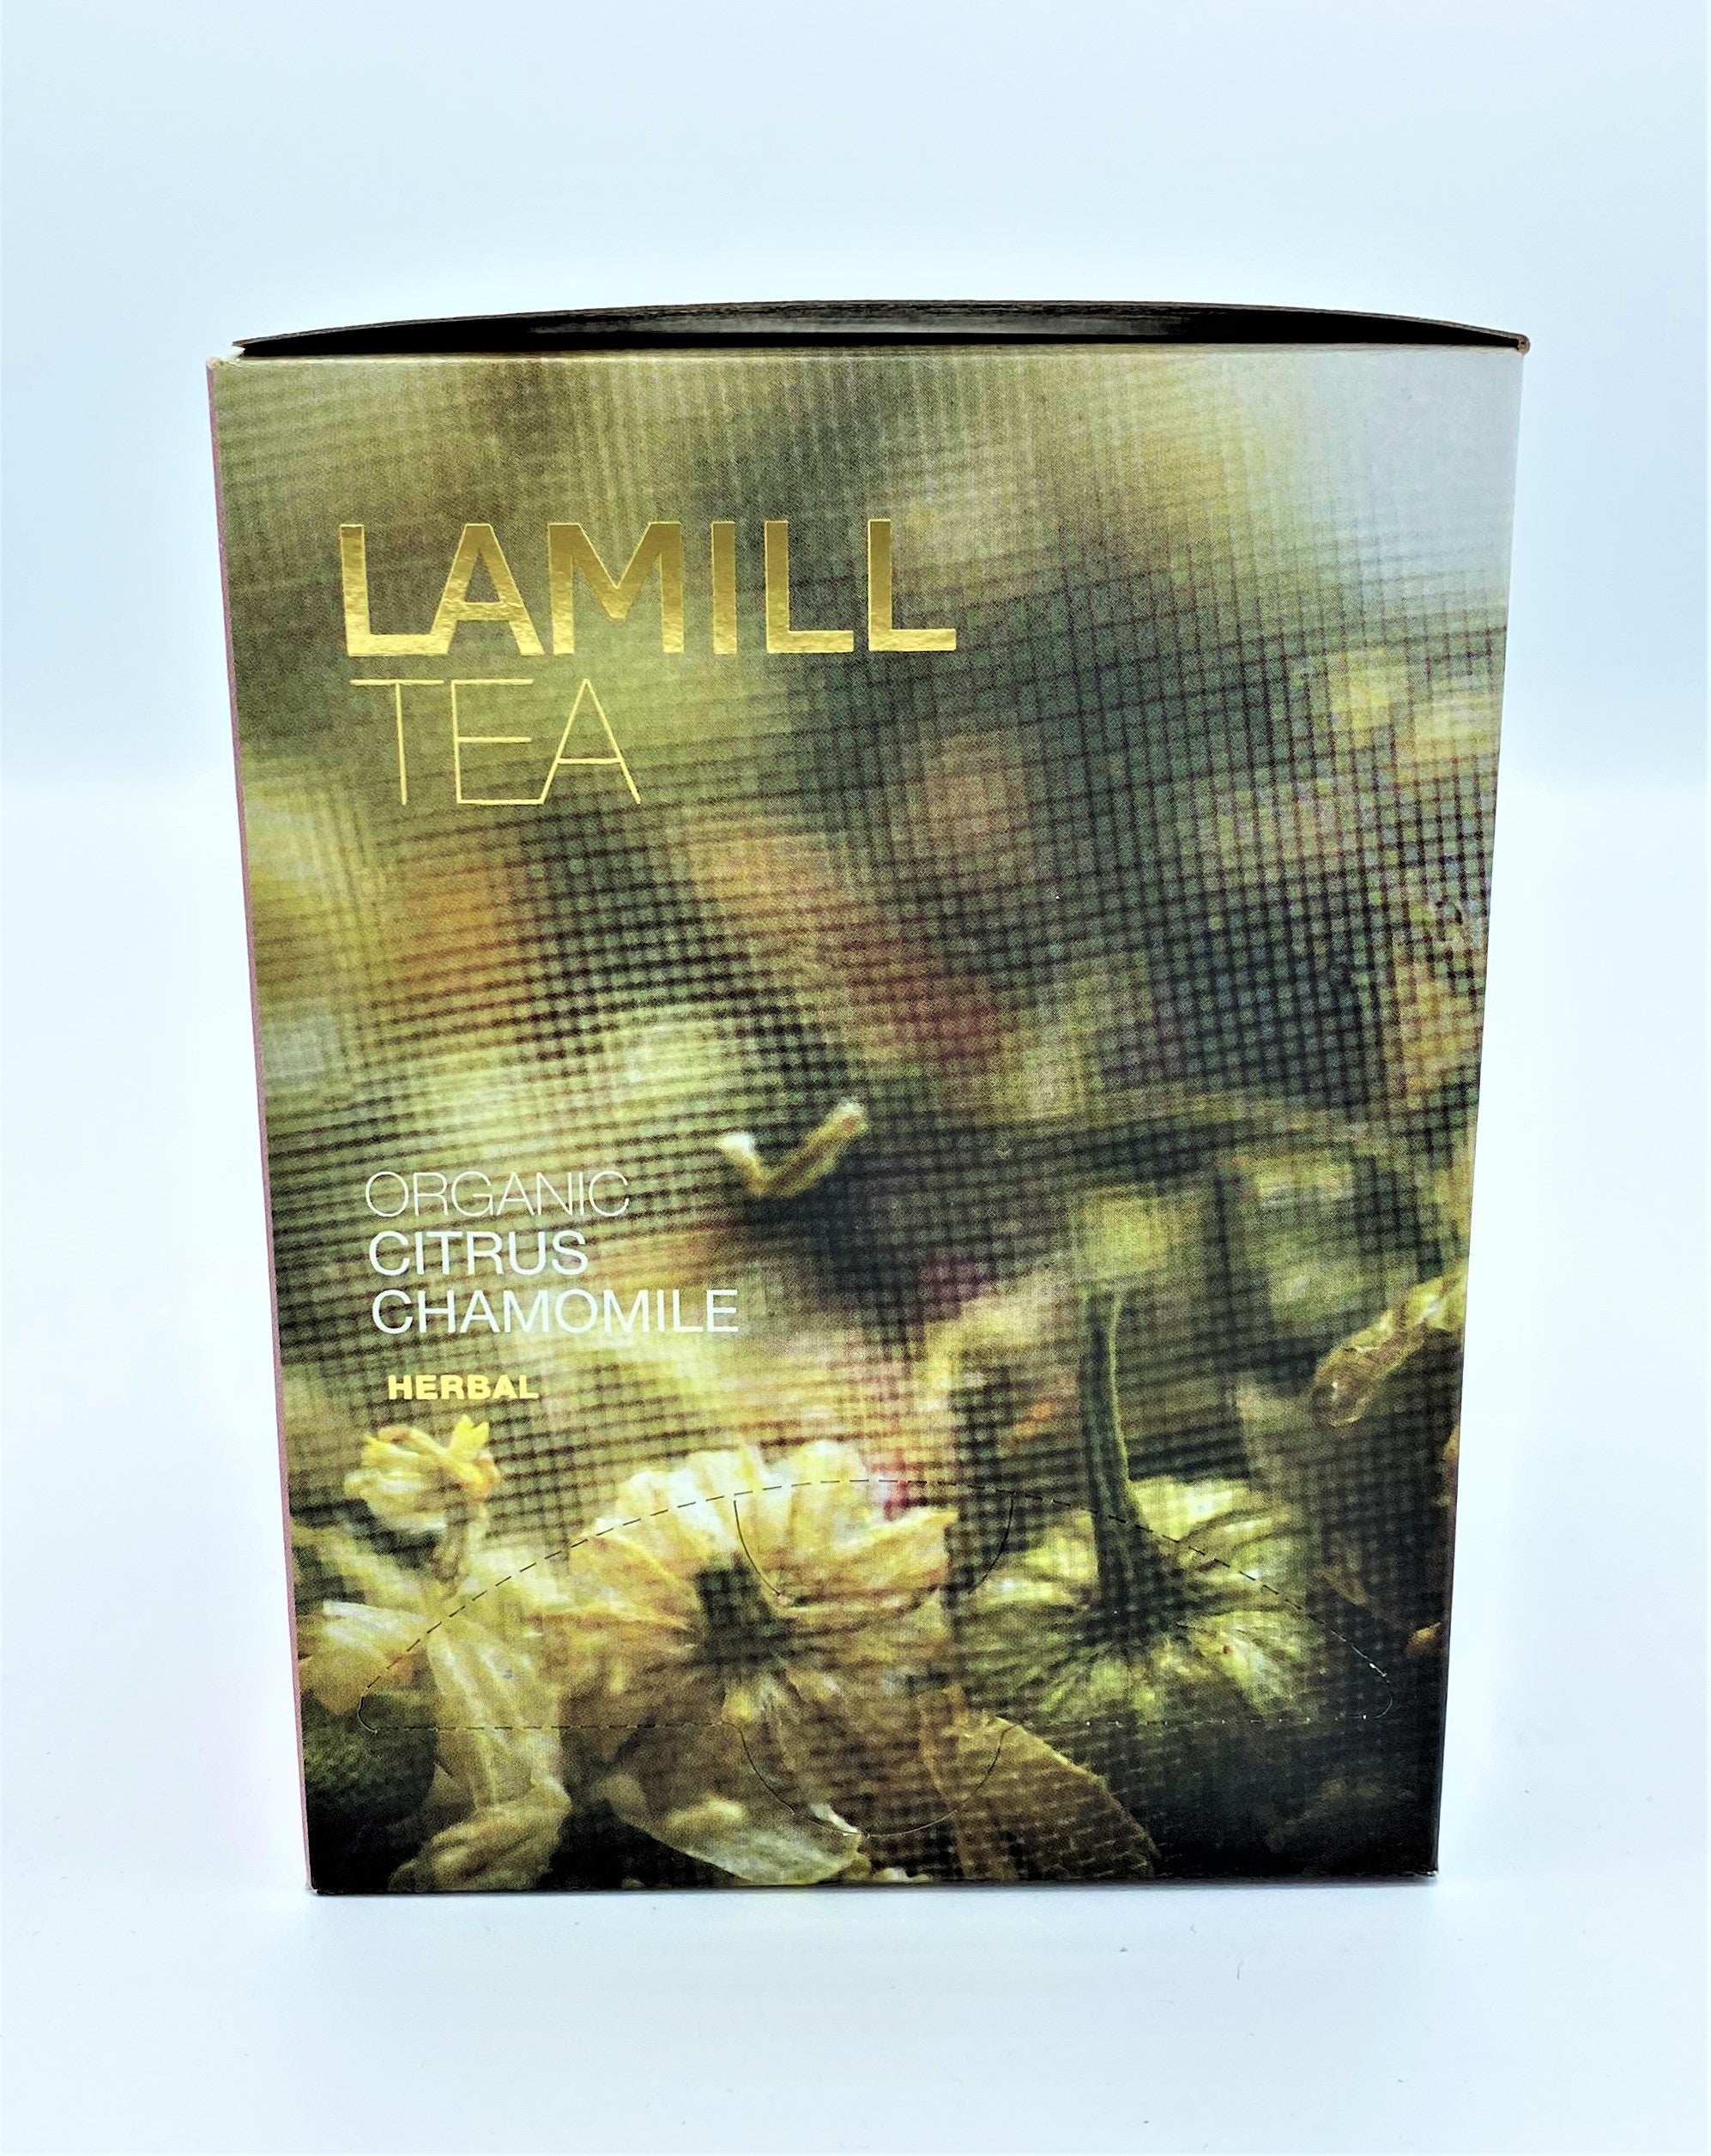 Lamill Tea, Organic Citrus Chamomile, Herbal, 15 tea bags